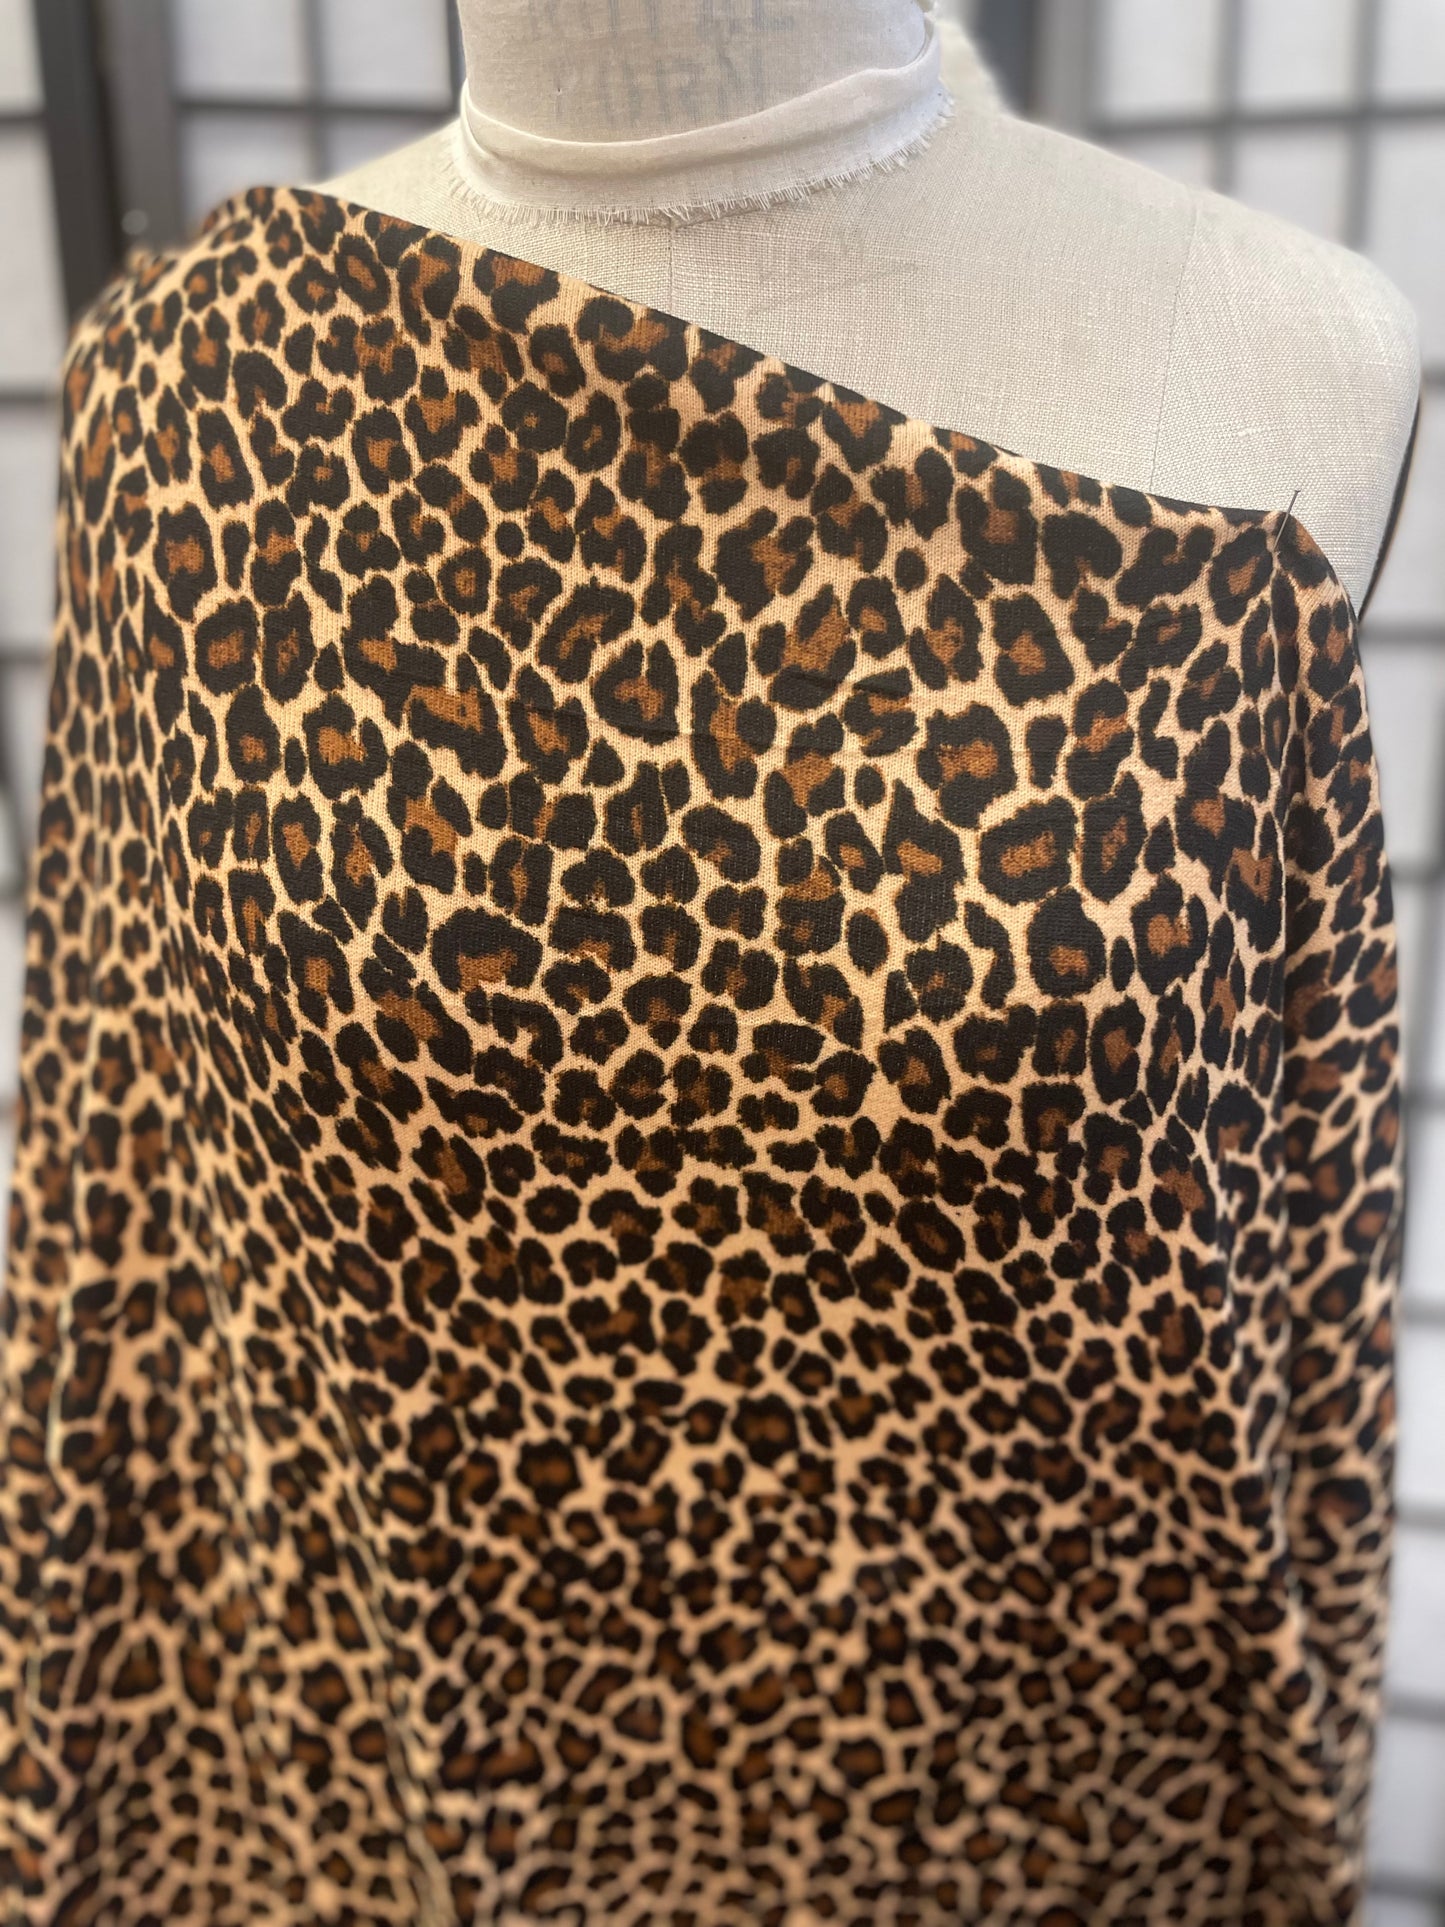 Soft Leopard Print ITY